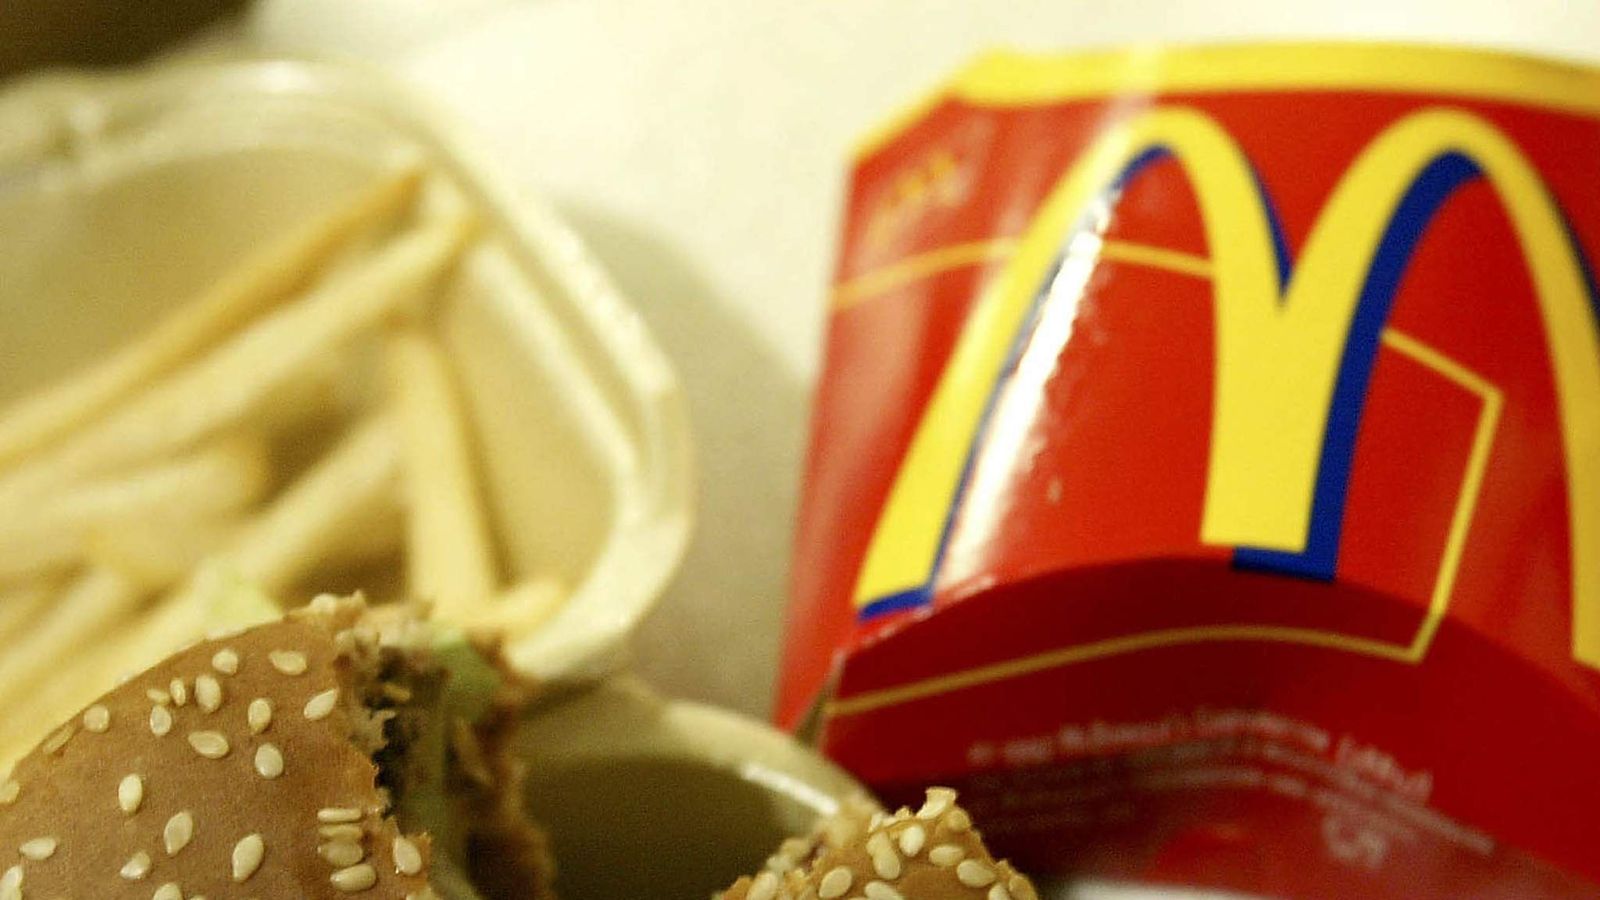 McDonald's to move non-US tax base to UK - Sky News